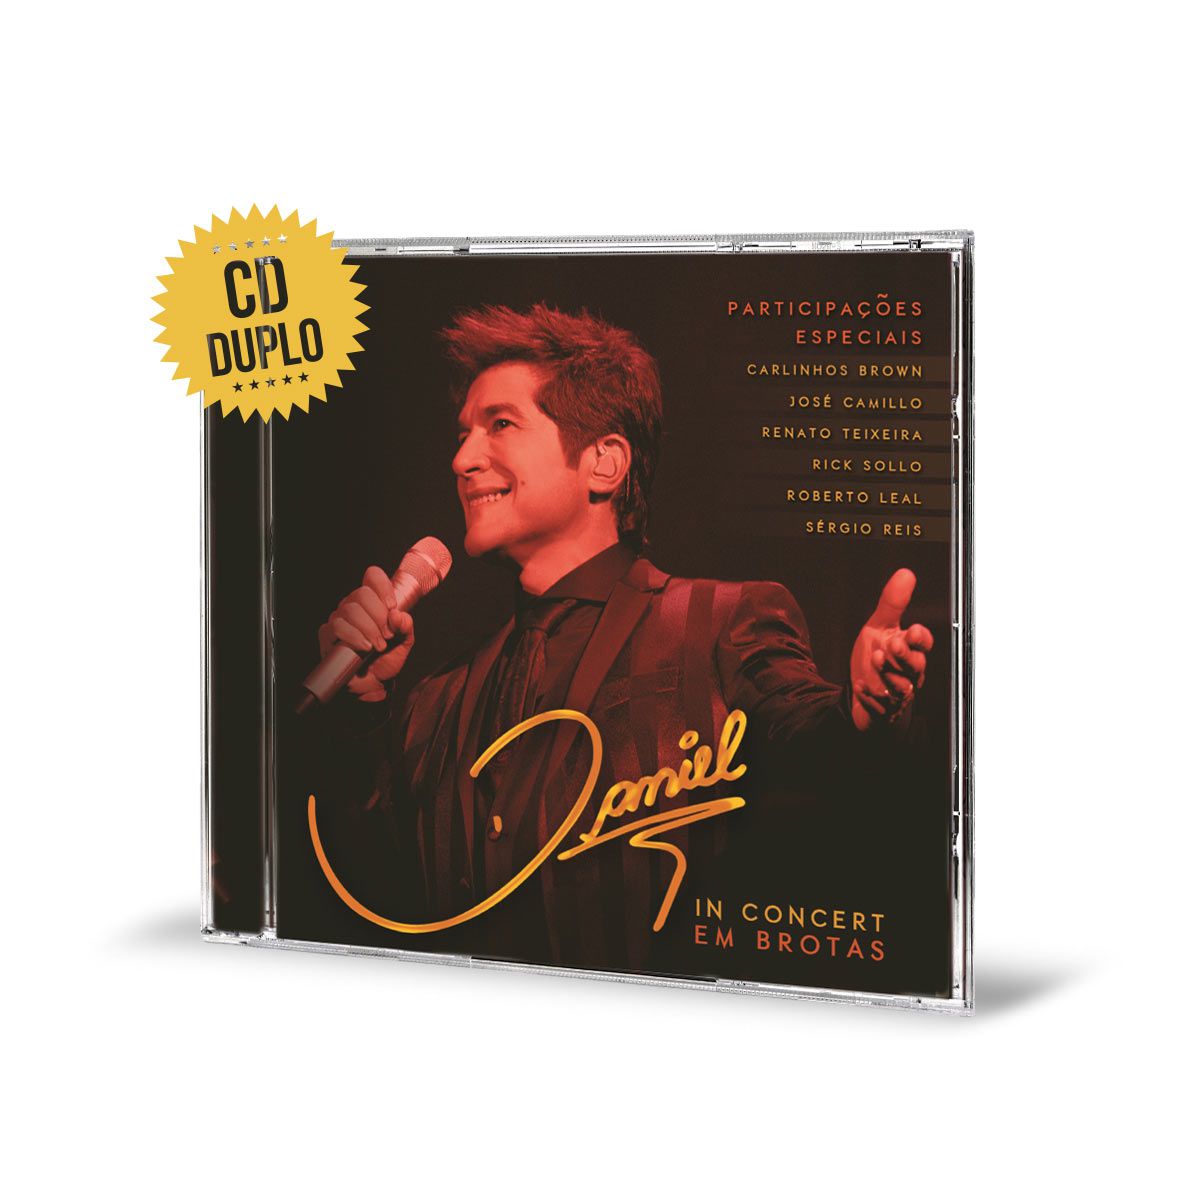 Daniel - In Concert - Em Brotas - (CD Duplo)